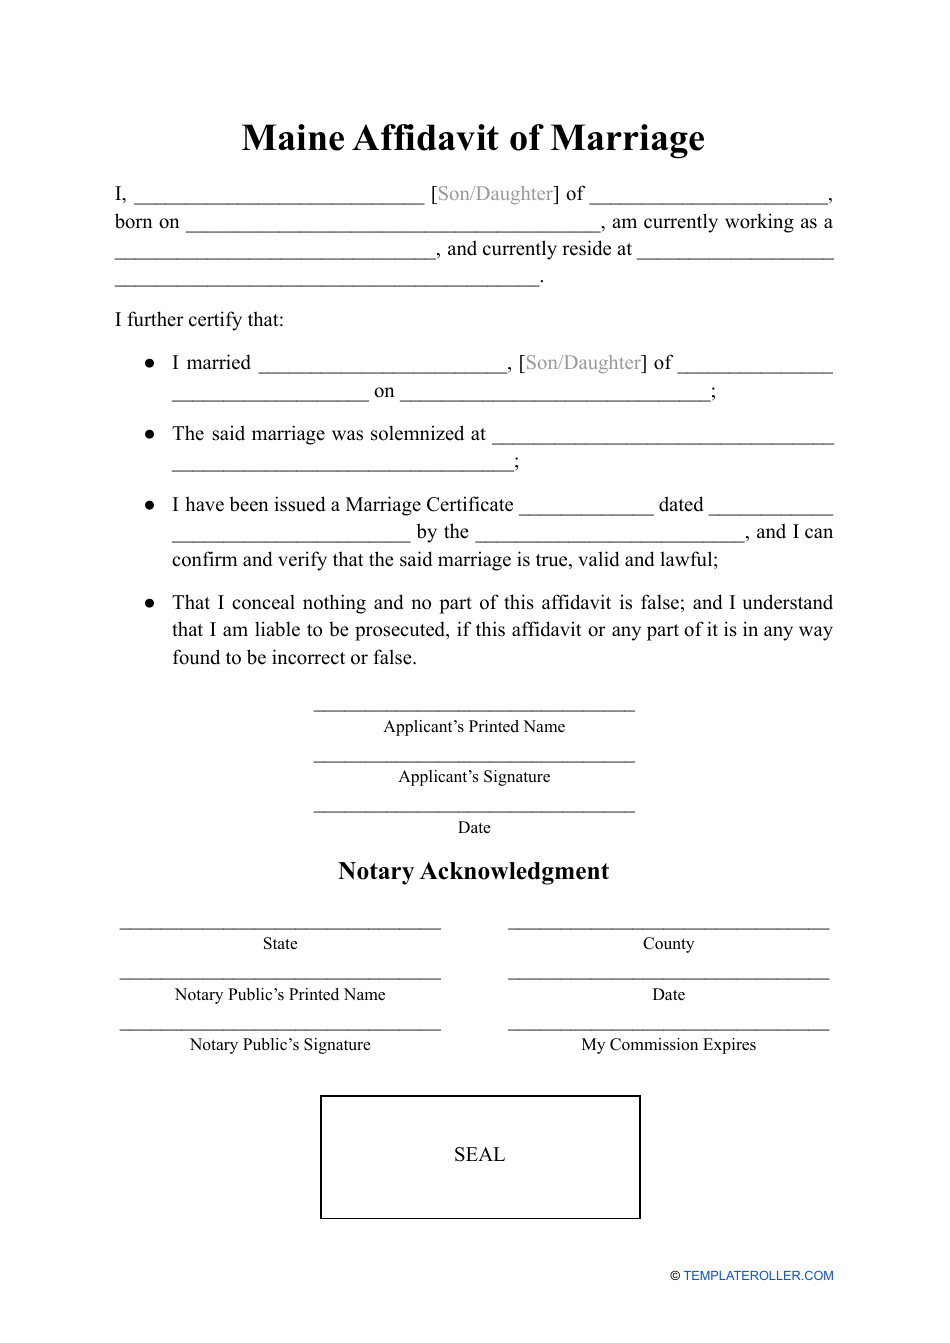 Affidavit of Marriage - Maine, Page 1